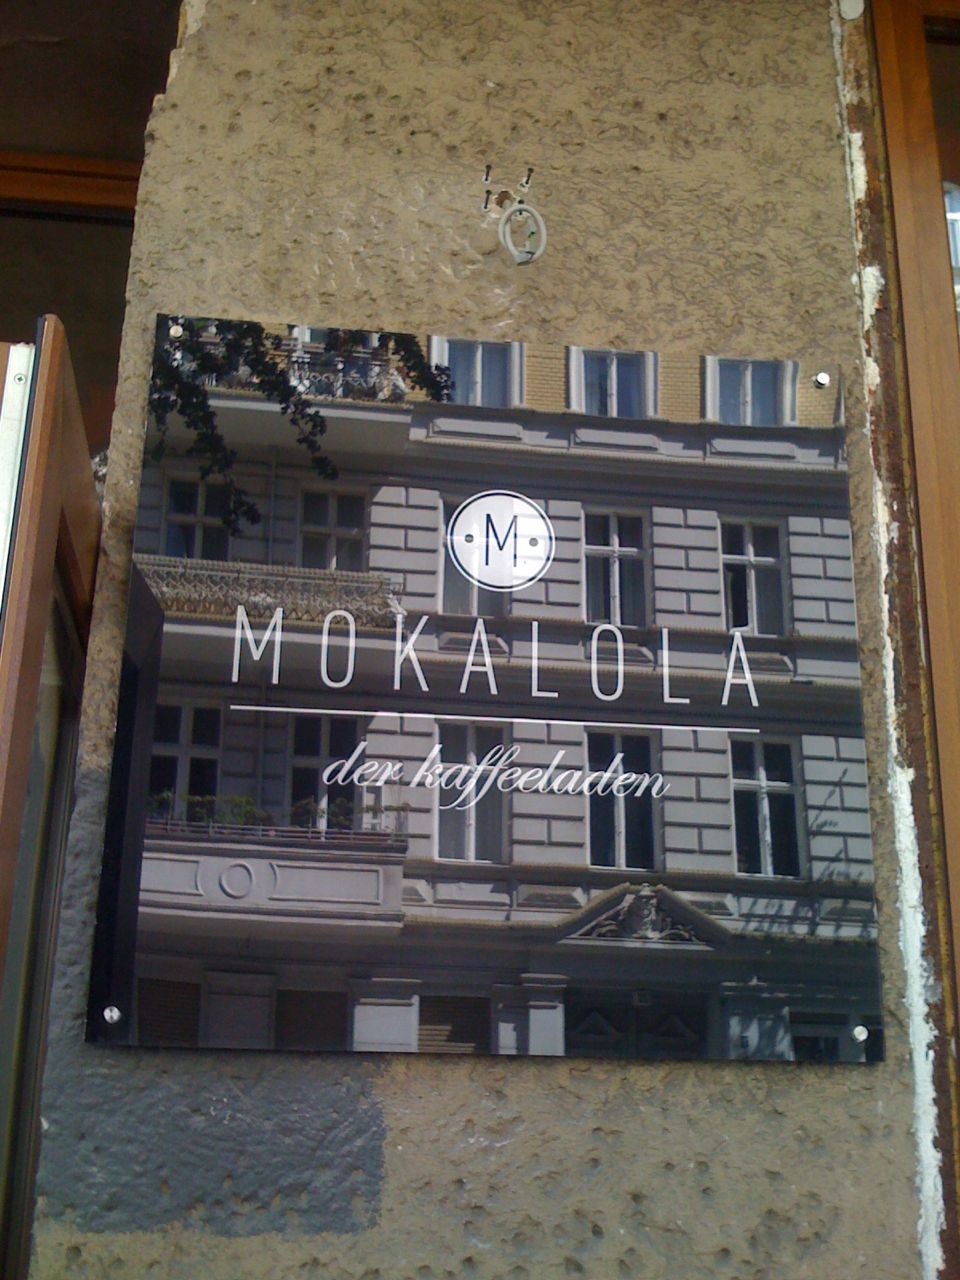 <!--:en-->!!!Cafe Deluxe at Mokalola in Schoeneberg!!!<!--:-->